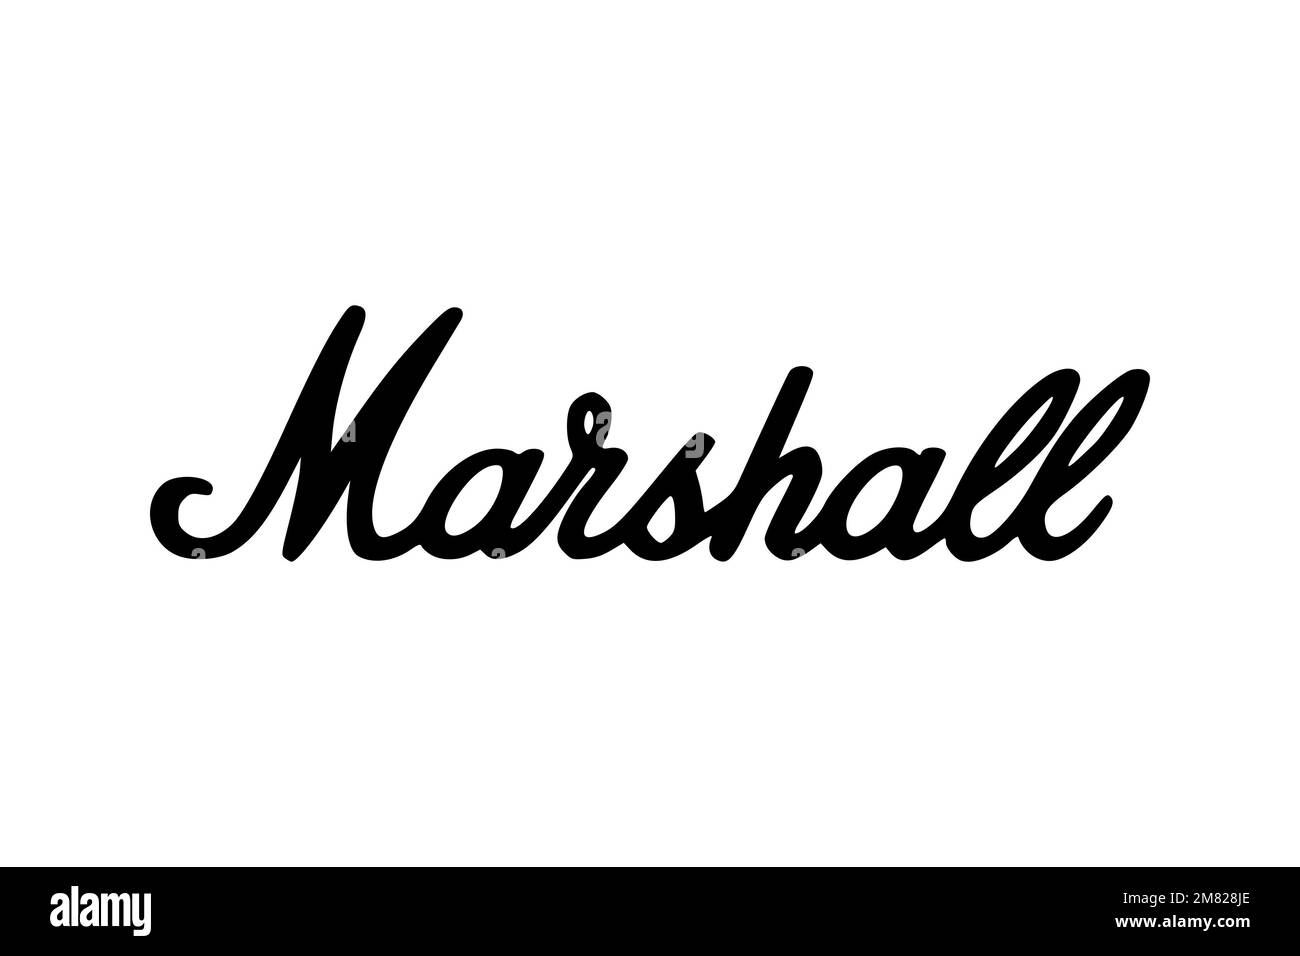 Marshall logo Black and White Stock Photos & Images - Alamy